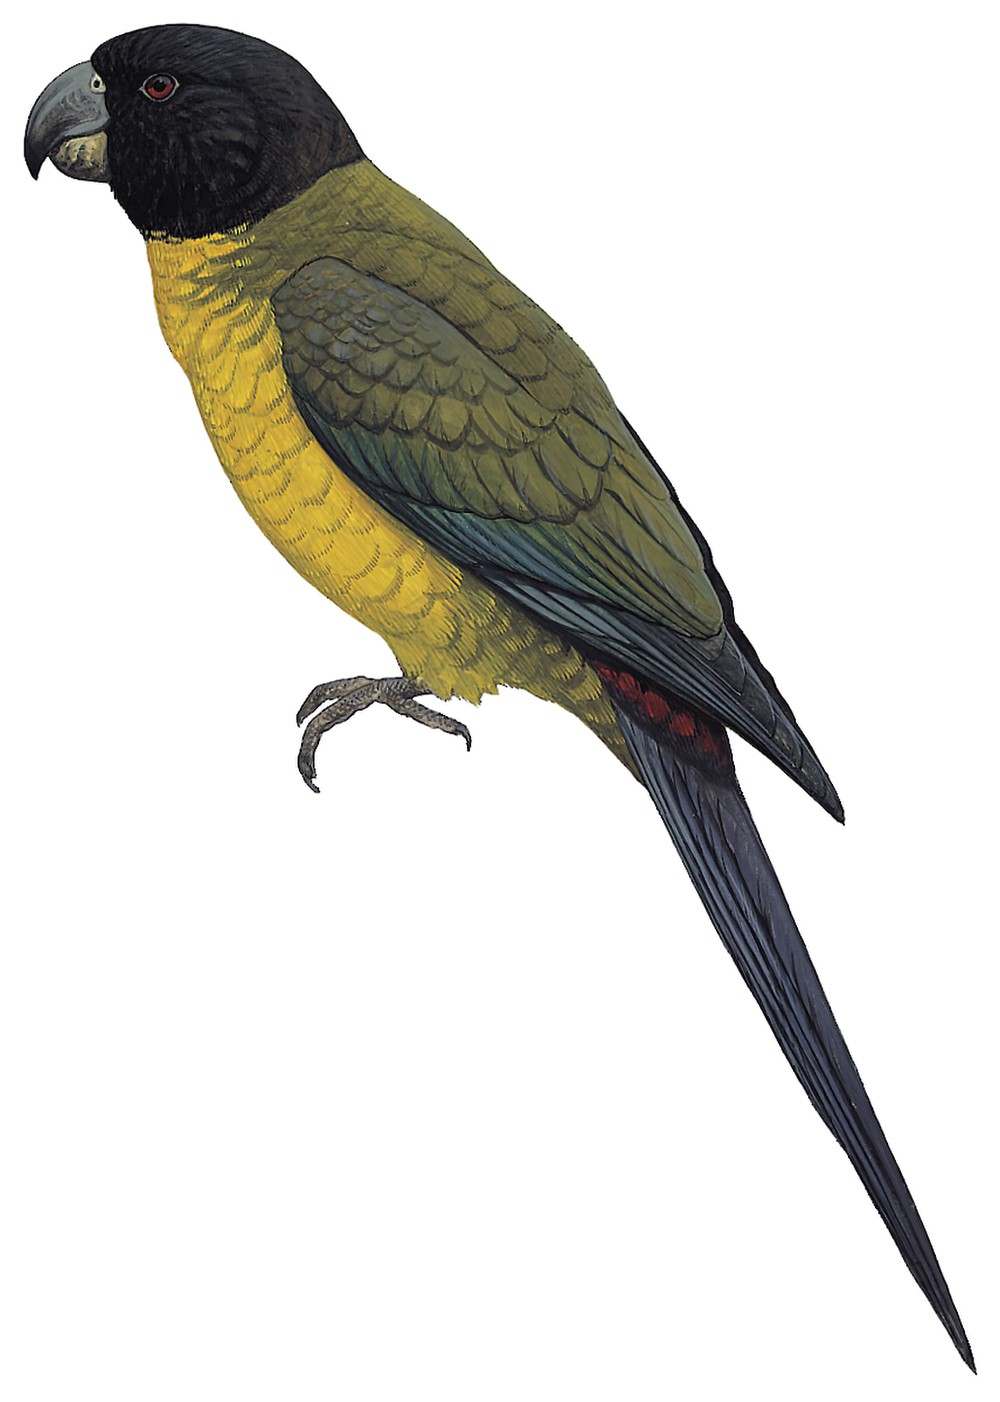 Raiatea Parakeet / Cyanoramphus ulietanus